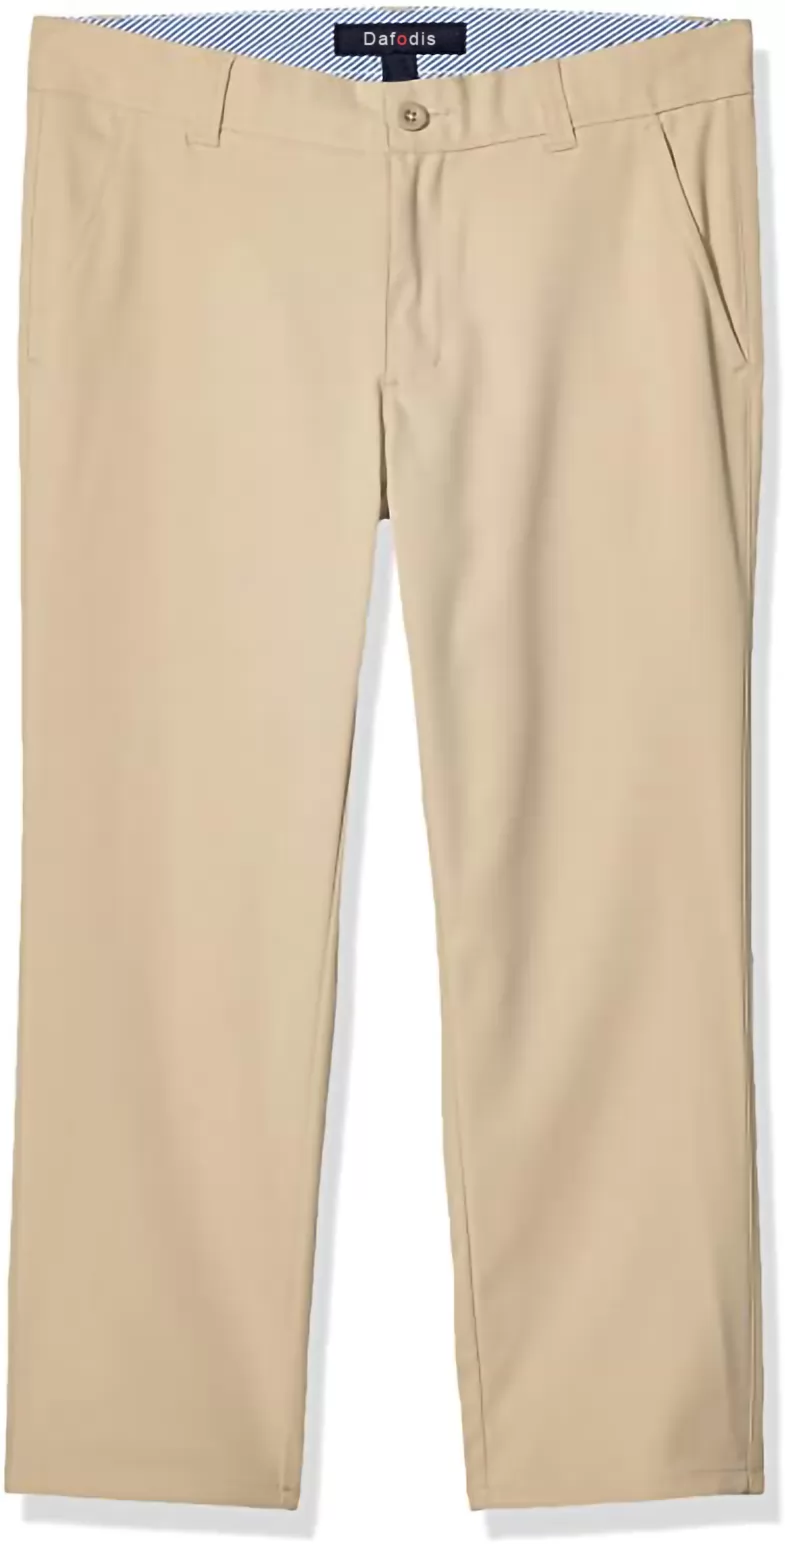 Dafodis Boys Performance Golf Pants, Breathable, Kids School Uniform Clothes Bottom